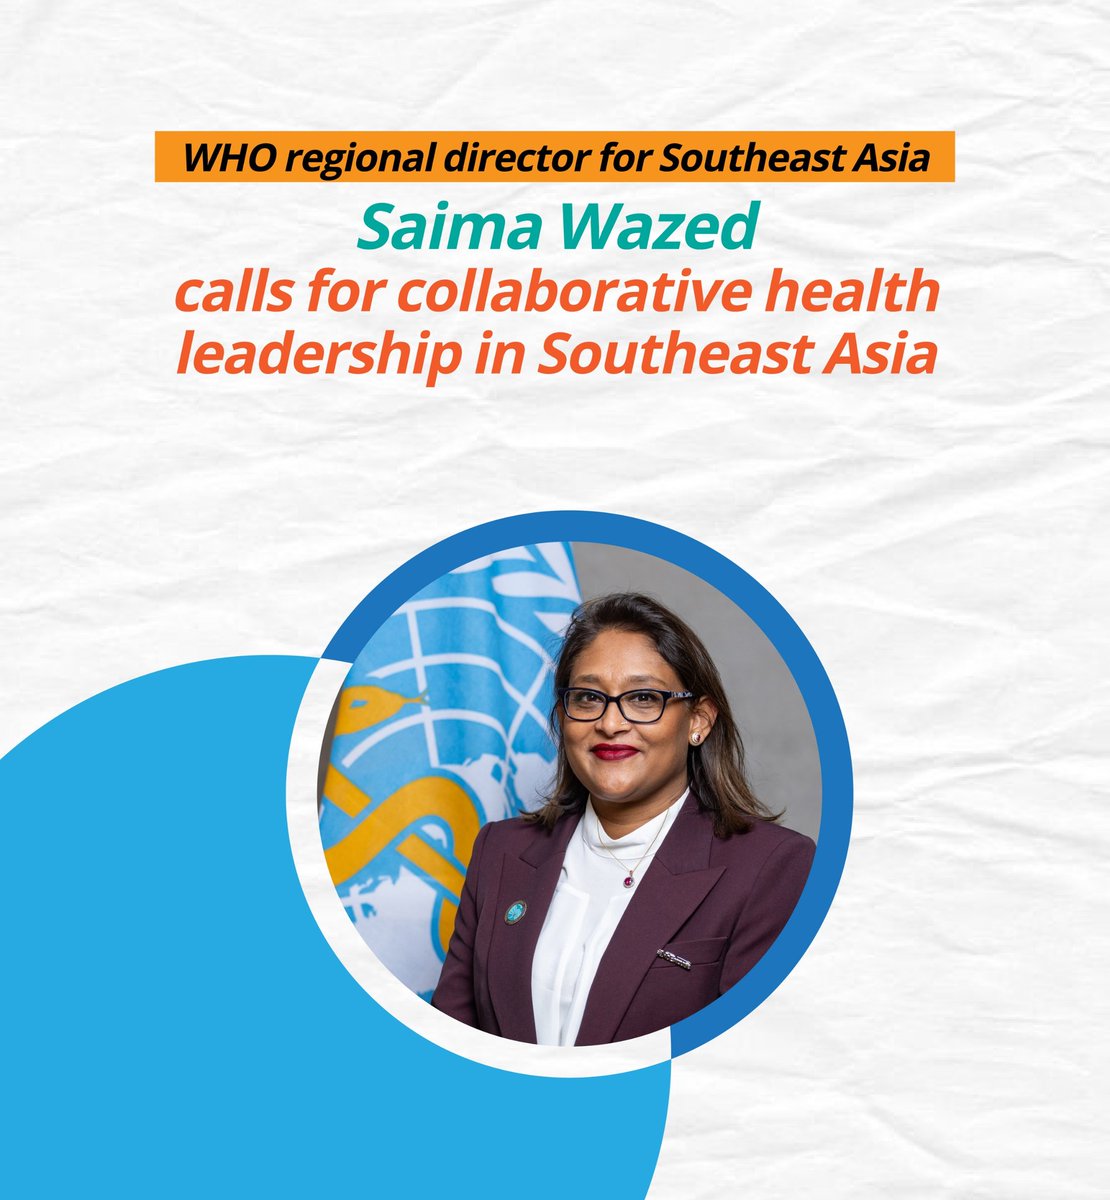 WHO regional director for Southeast Asia Saima Wazed  calls for collaborative health leadership in Southeast Asia.
@WorldHealth @WHO @drSaimaWazed #SoutheastAsia #WHO